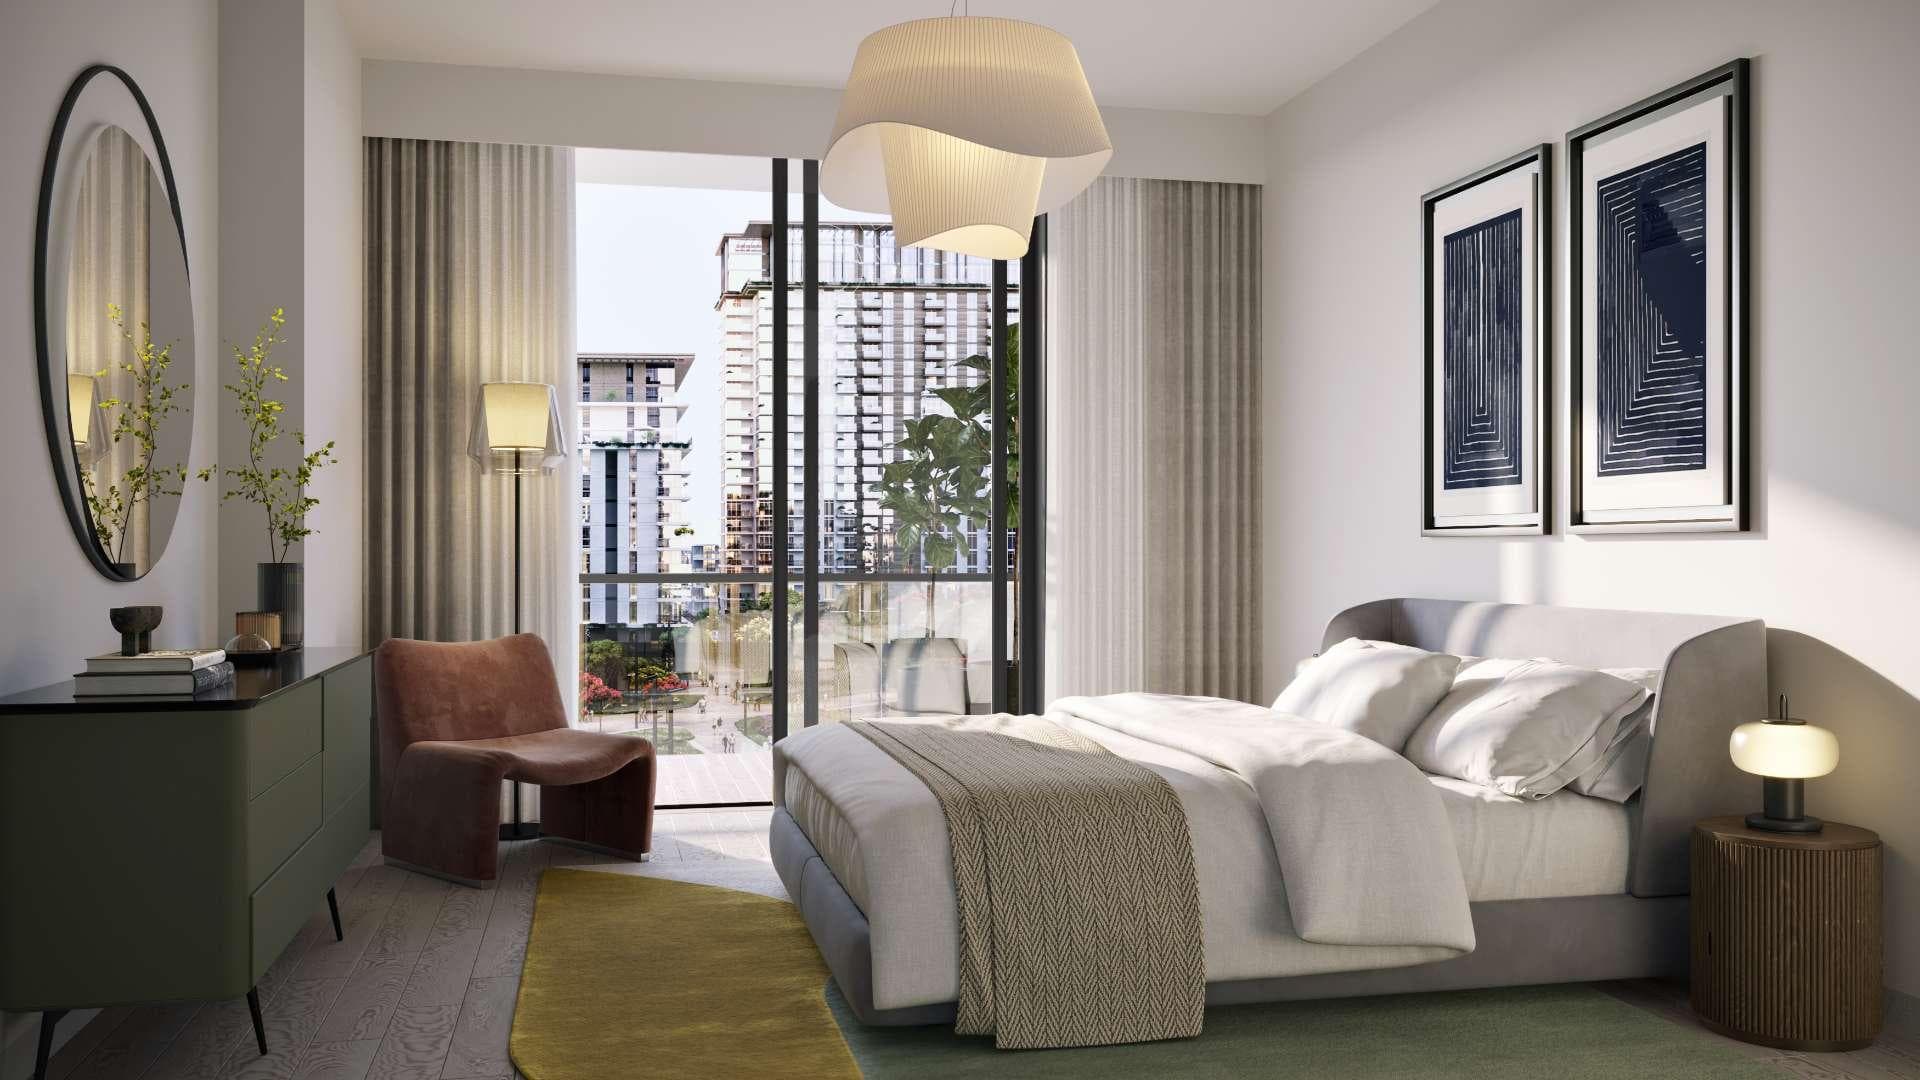 3 Bedroom Apartment For Sale Central Park Lp13895 D2aa73ed4558800.jpg